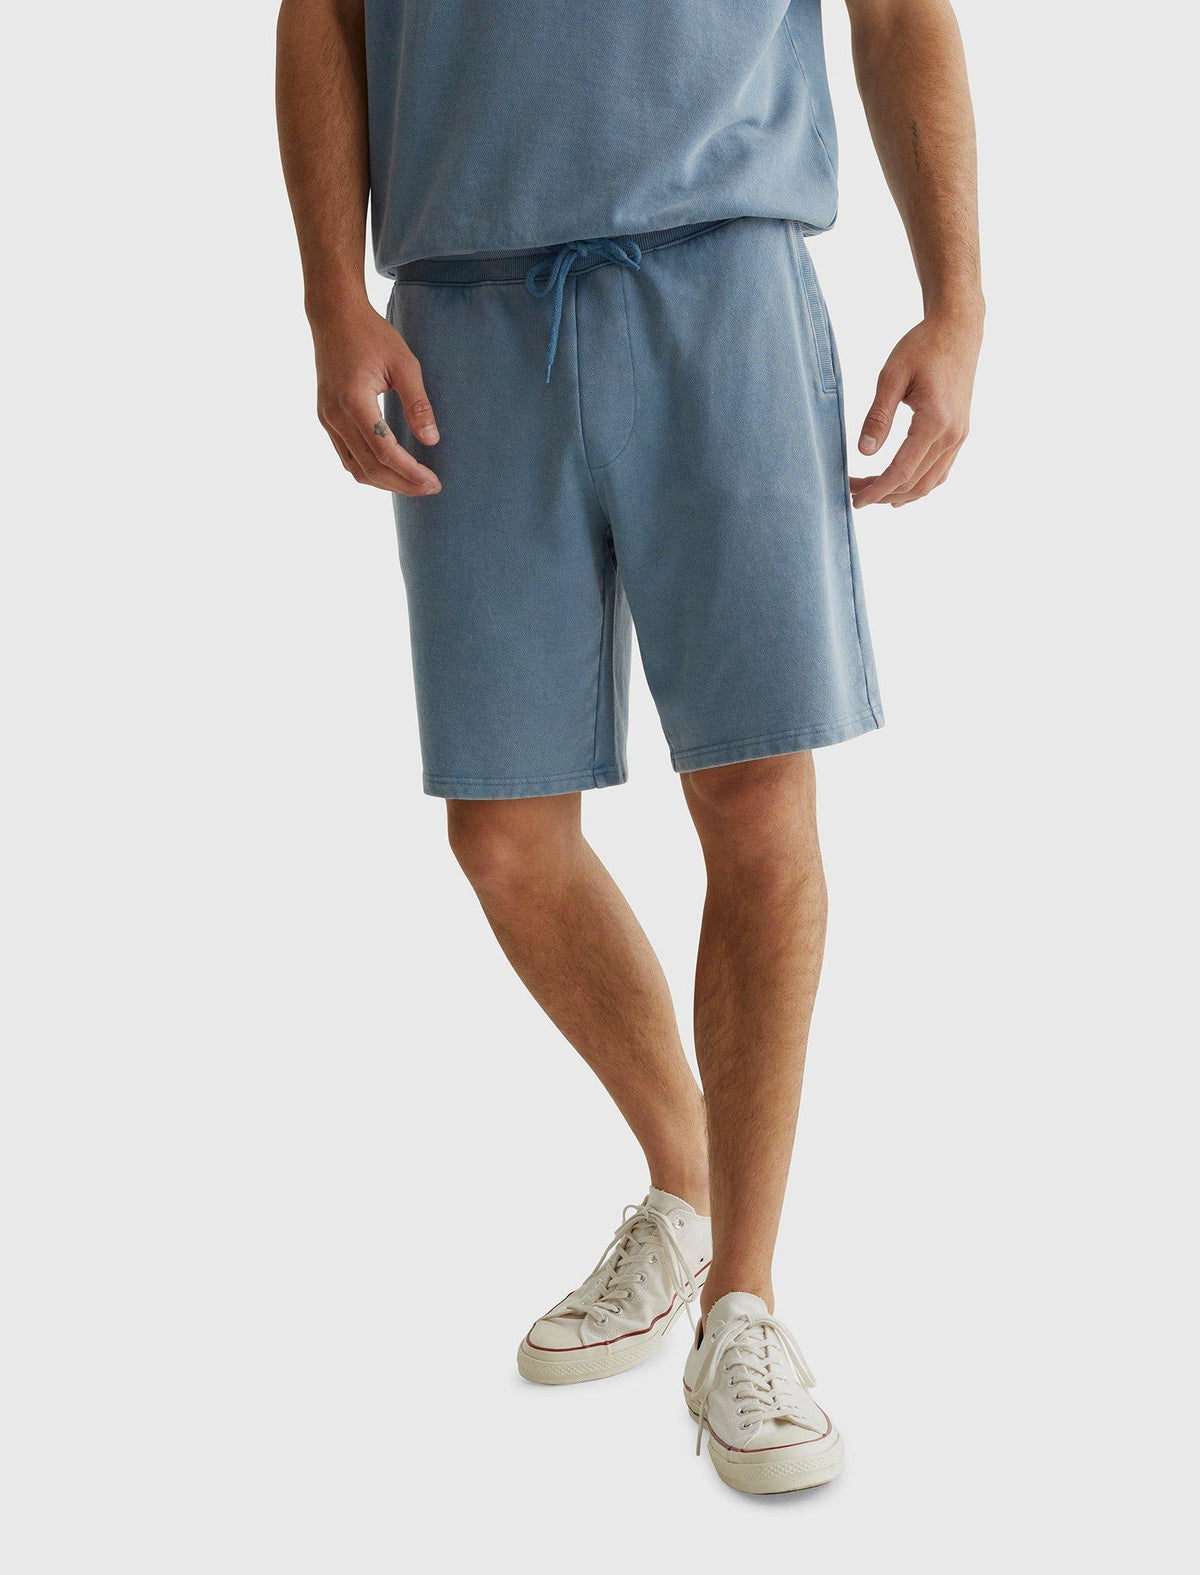 Lucky Brand Terry Short - Men's Shorts Denim Jean #4887 Blue Mirage #18-4215 Tcx